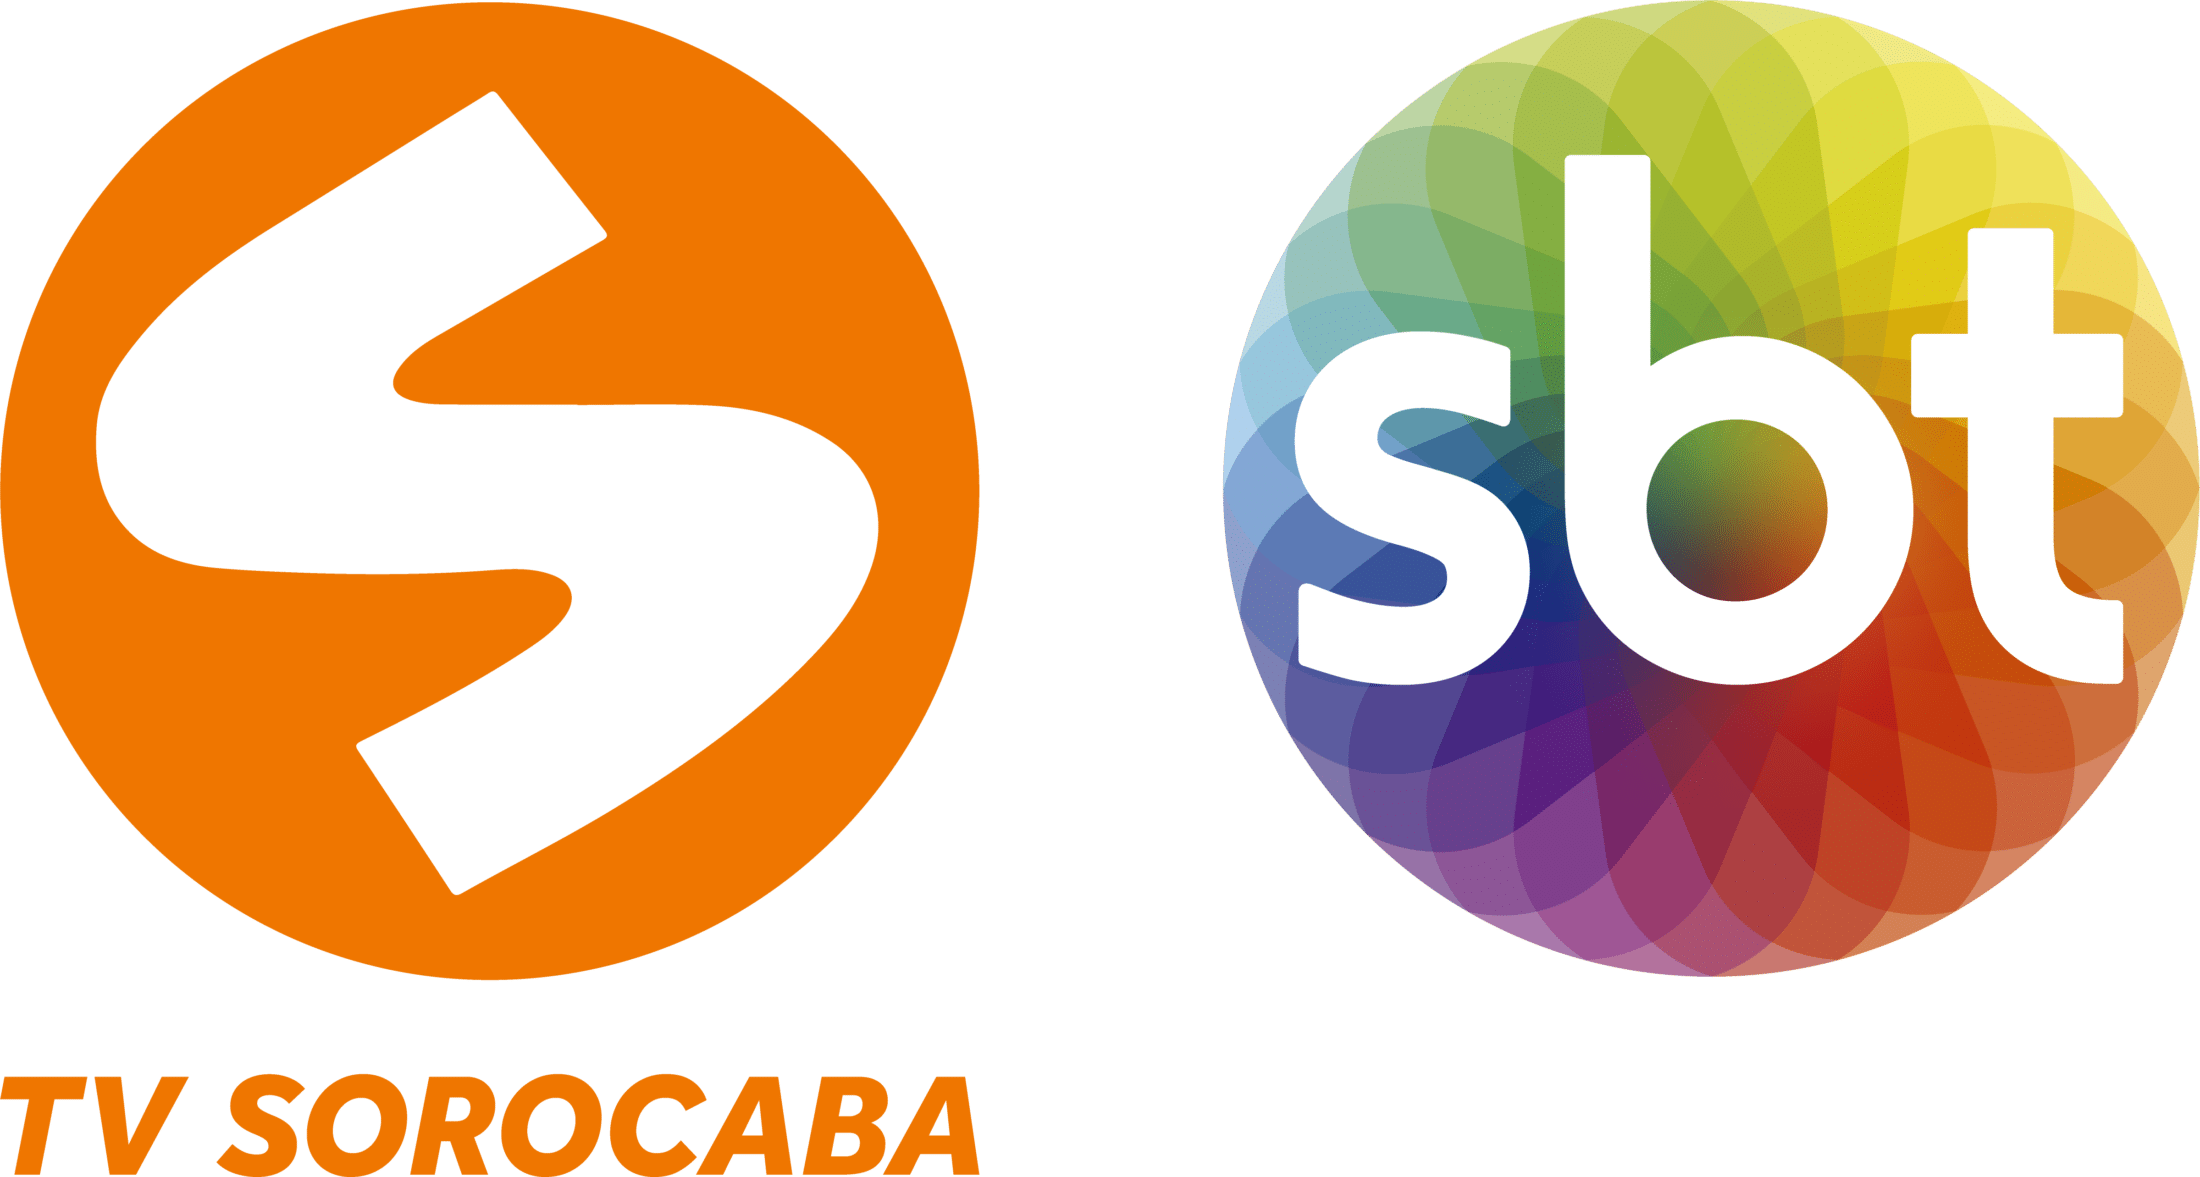 TV Sorocaba